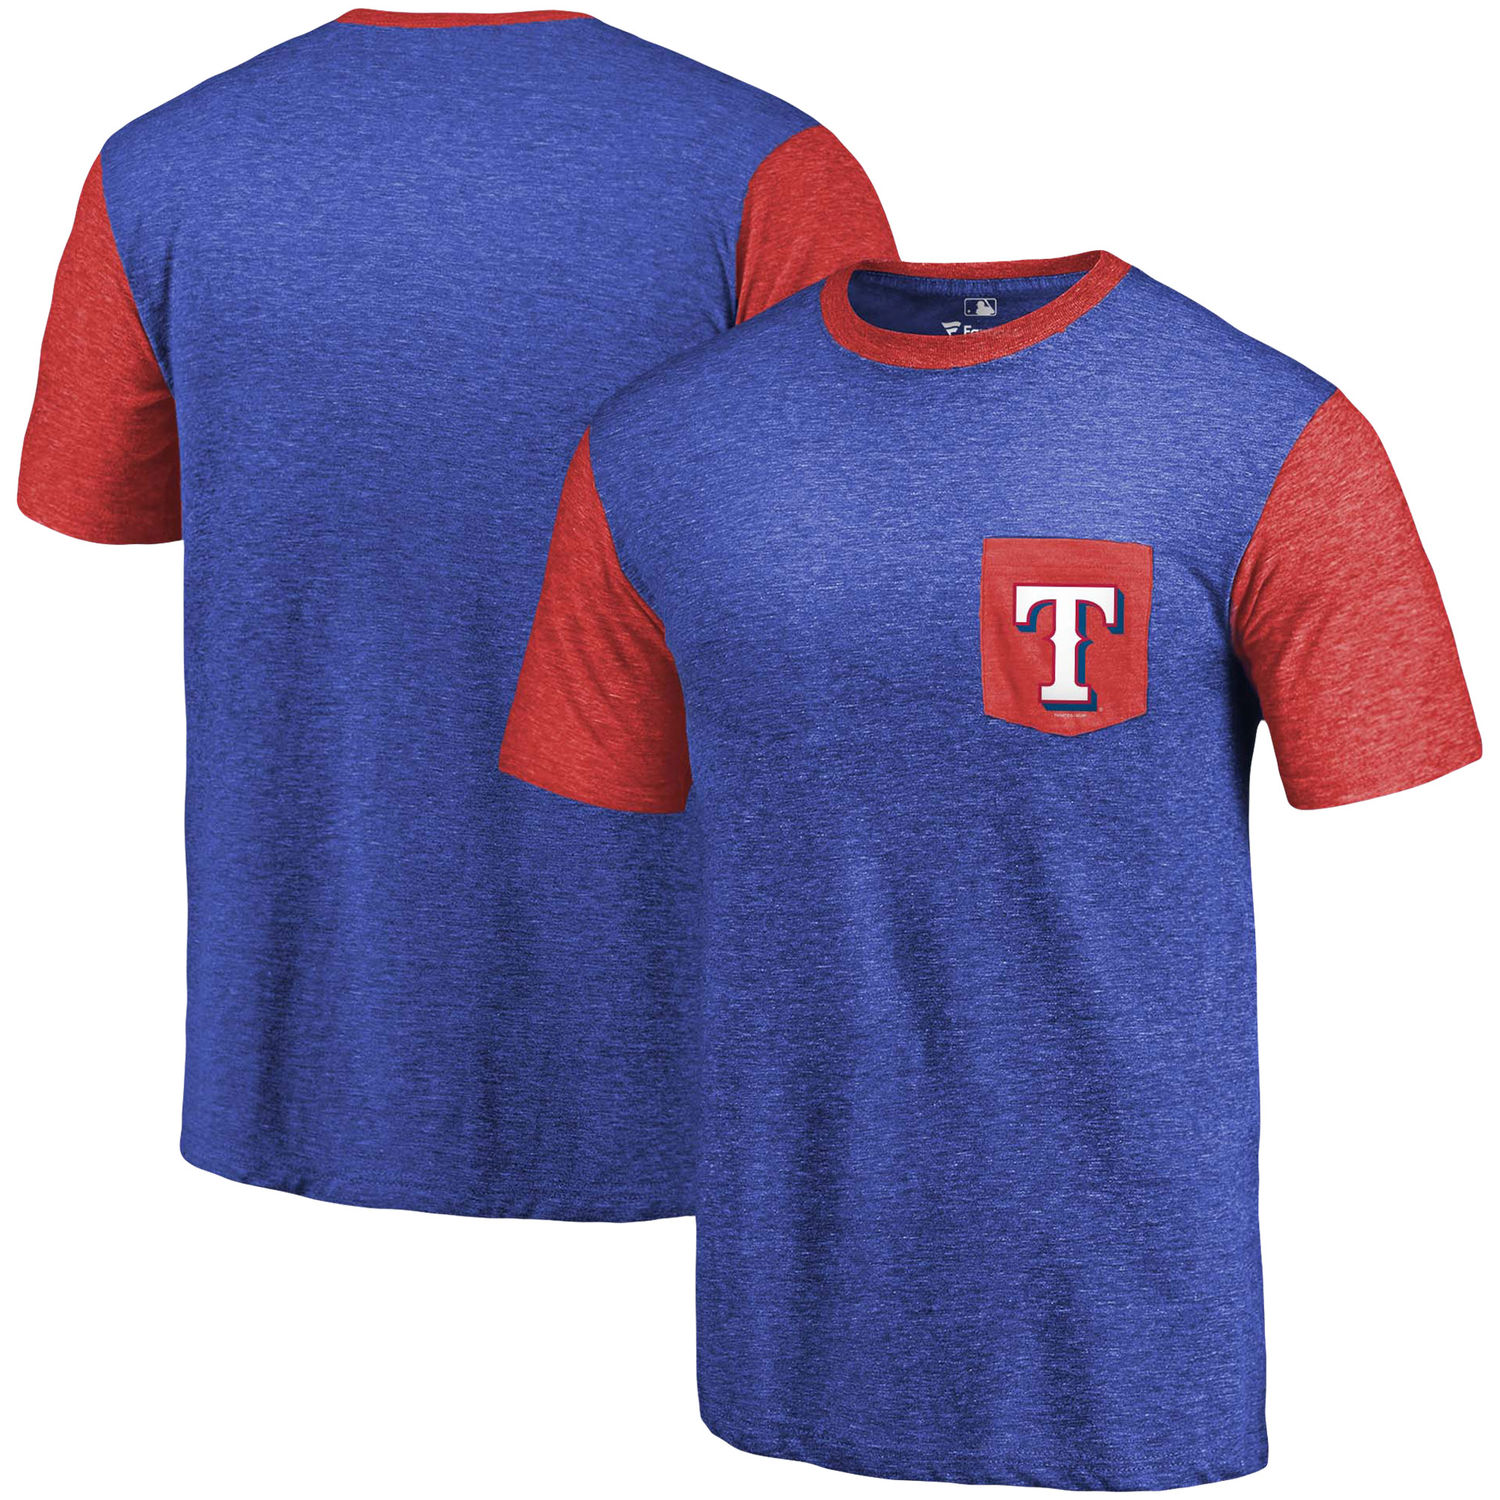 Men's Texas Rangers Fanatics Branded Royal-Red Tri-Blend Refresh Pocket T-Shirt